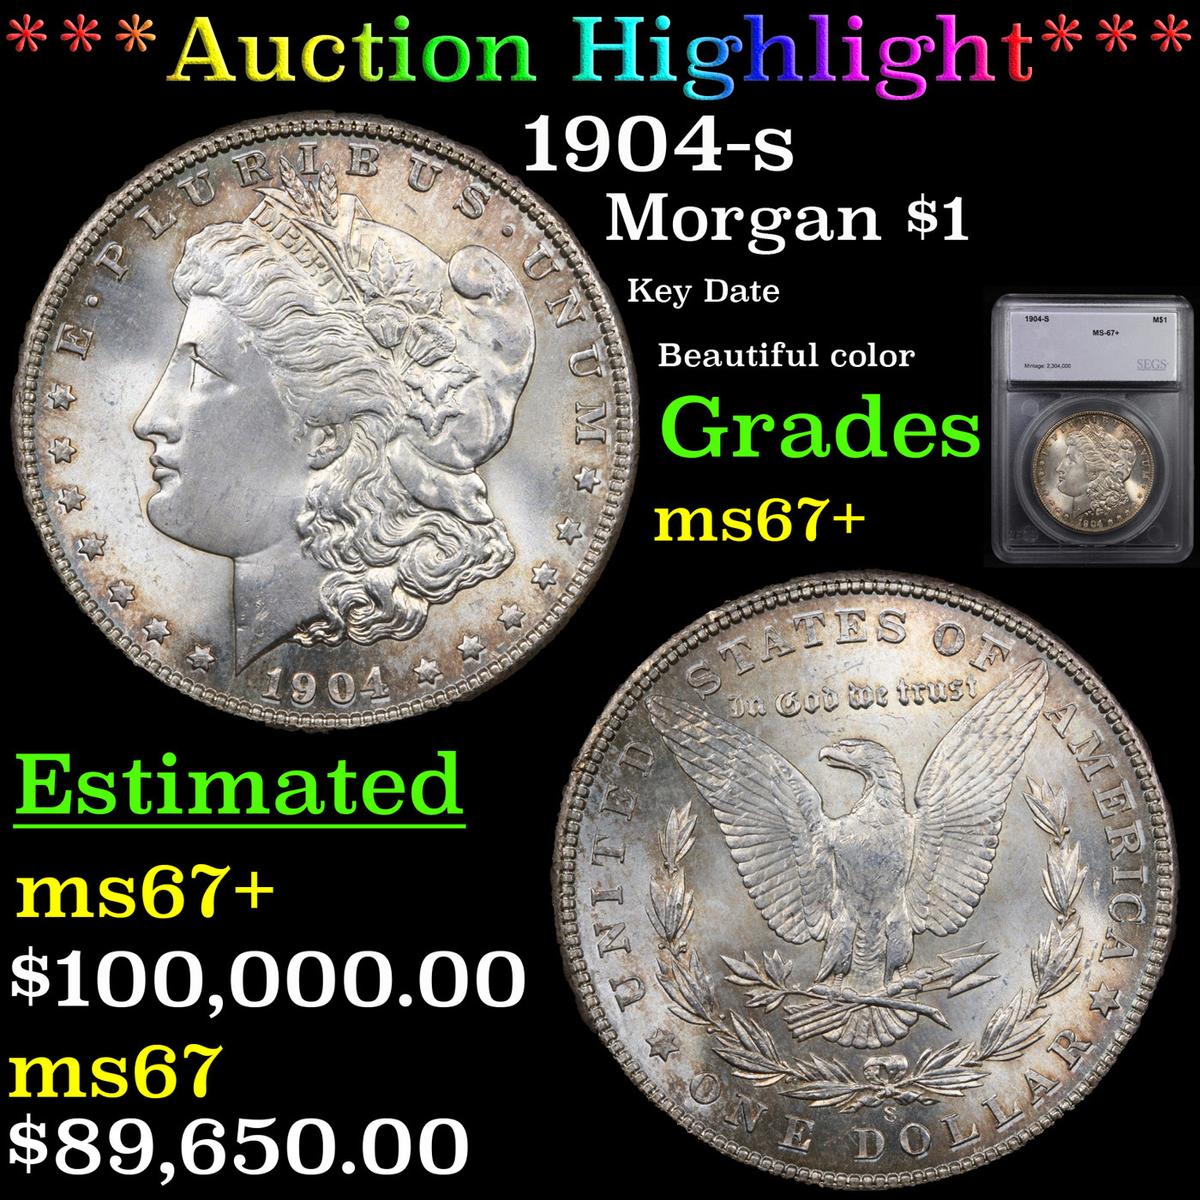 ***Auction Highlight*** 1904-s Morgan Dollar $1 Graded ms67+ By SEGS (fc)